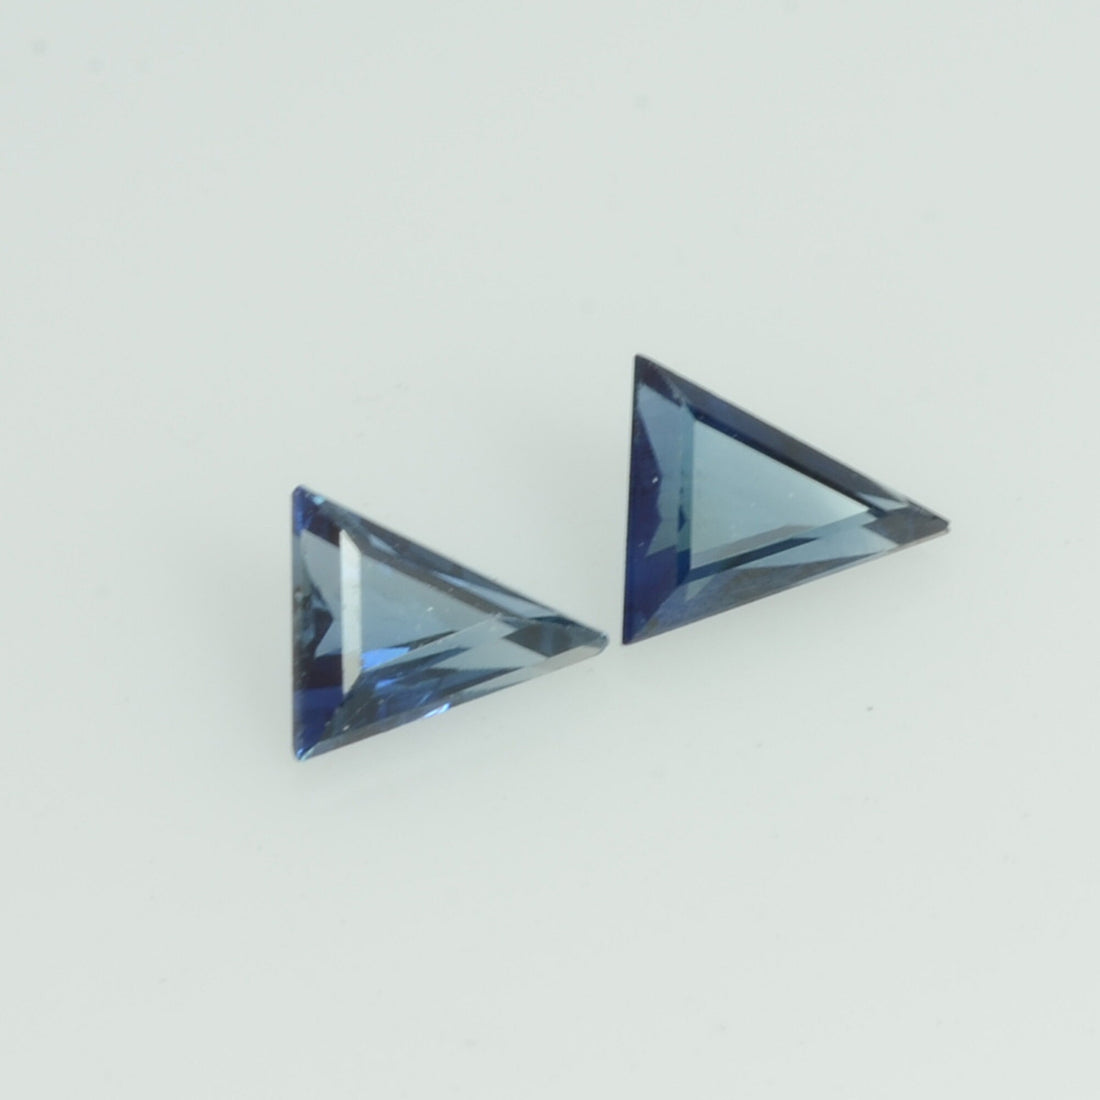 Natural Teal Blue Green Sapphire Loose Gemstone Triangle Cut Pair